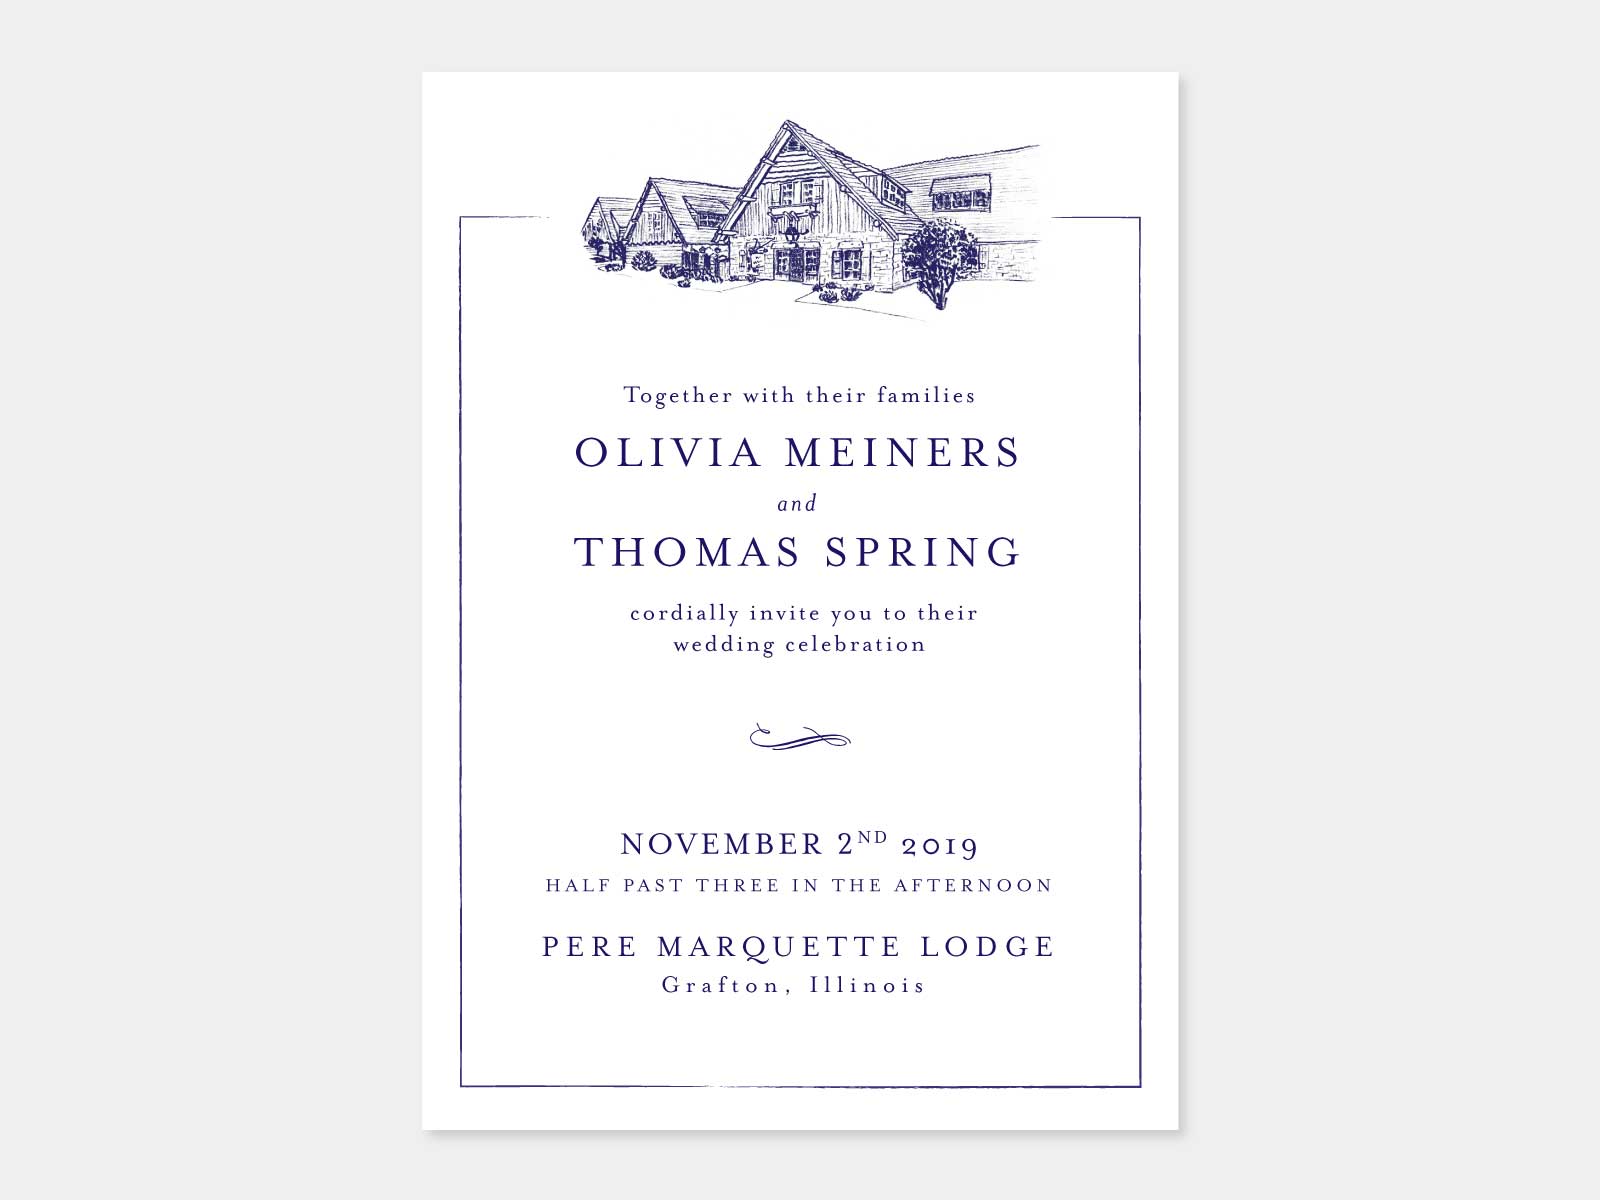 Wedding invitation with illustration of wedding venue